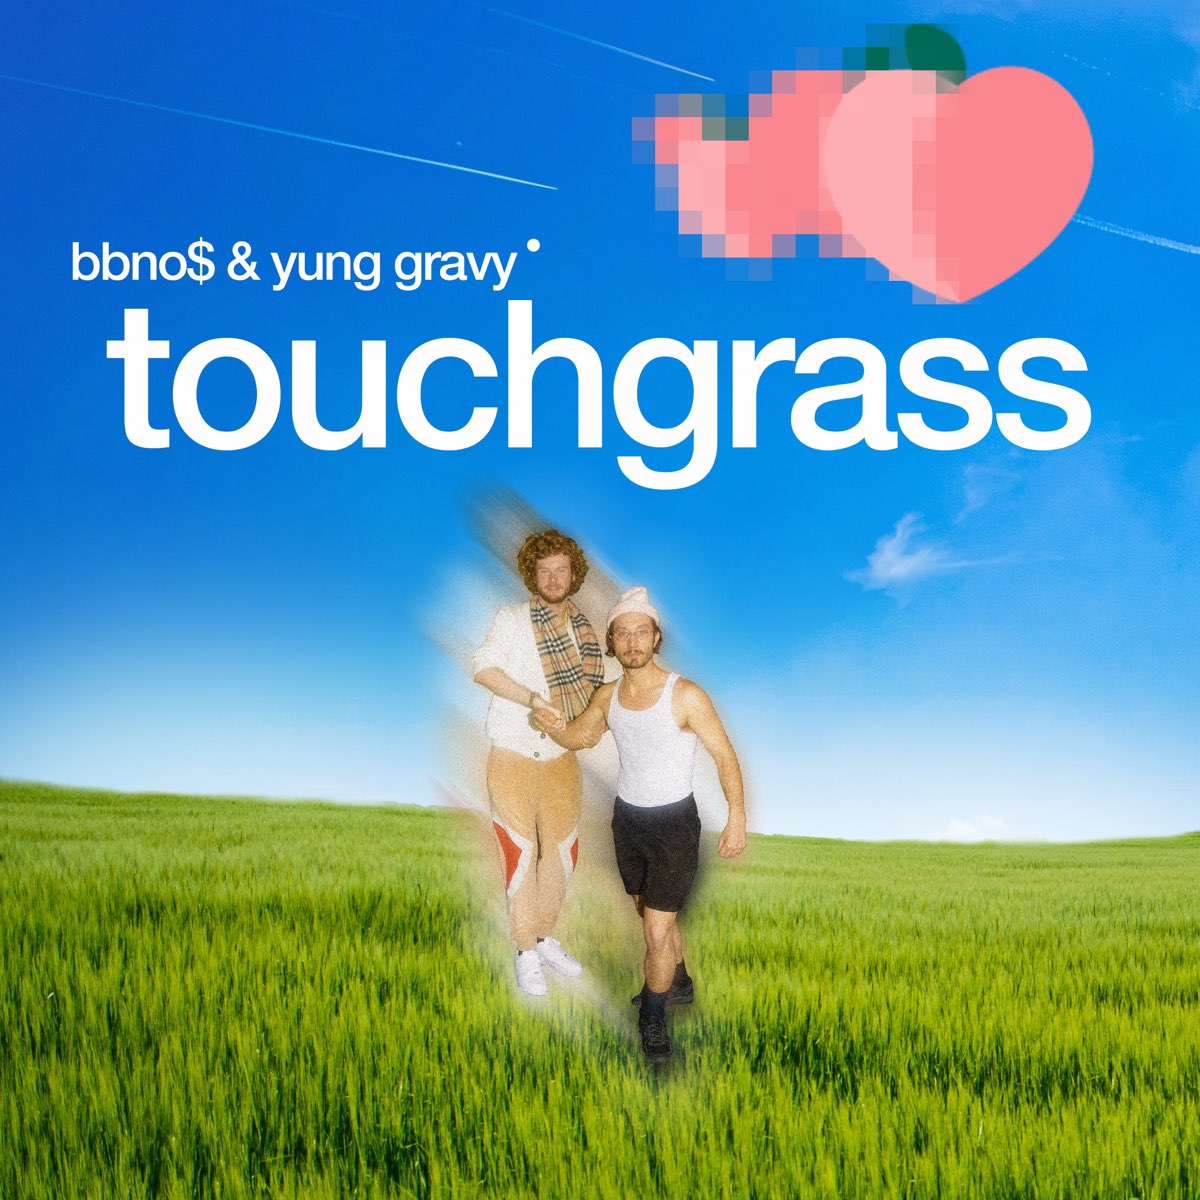 bbno$ & yung gravy - touch grass (Music Video) 